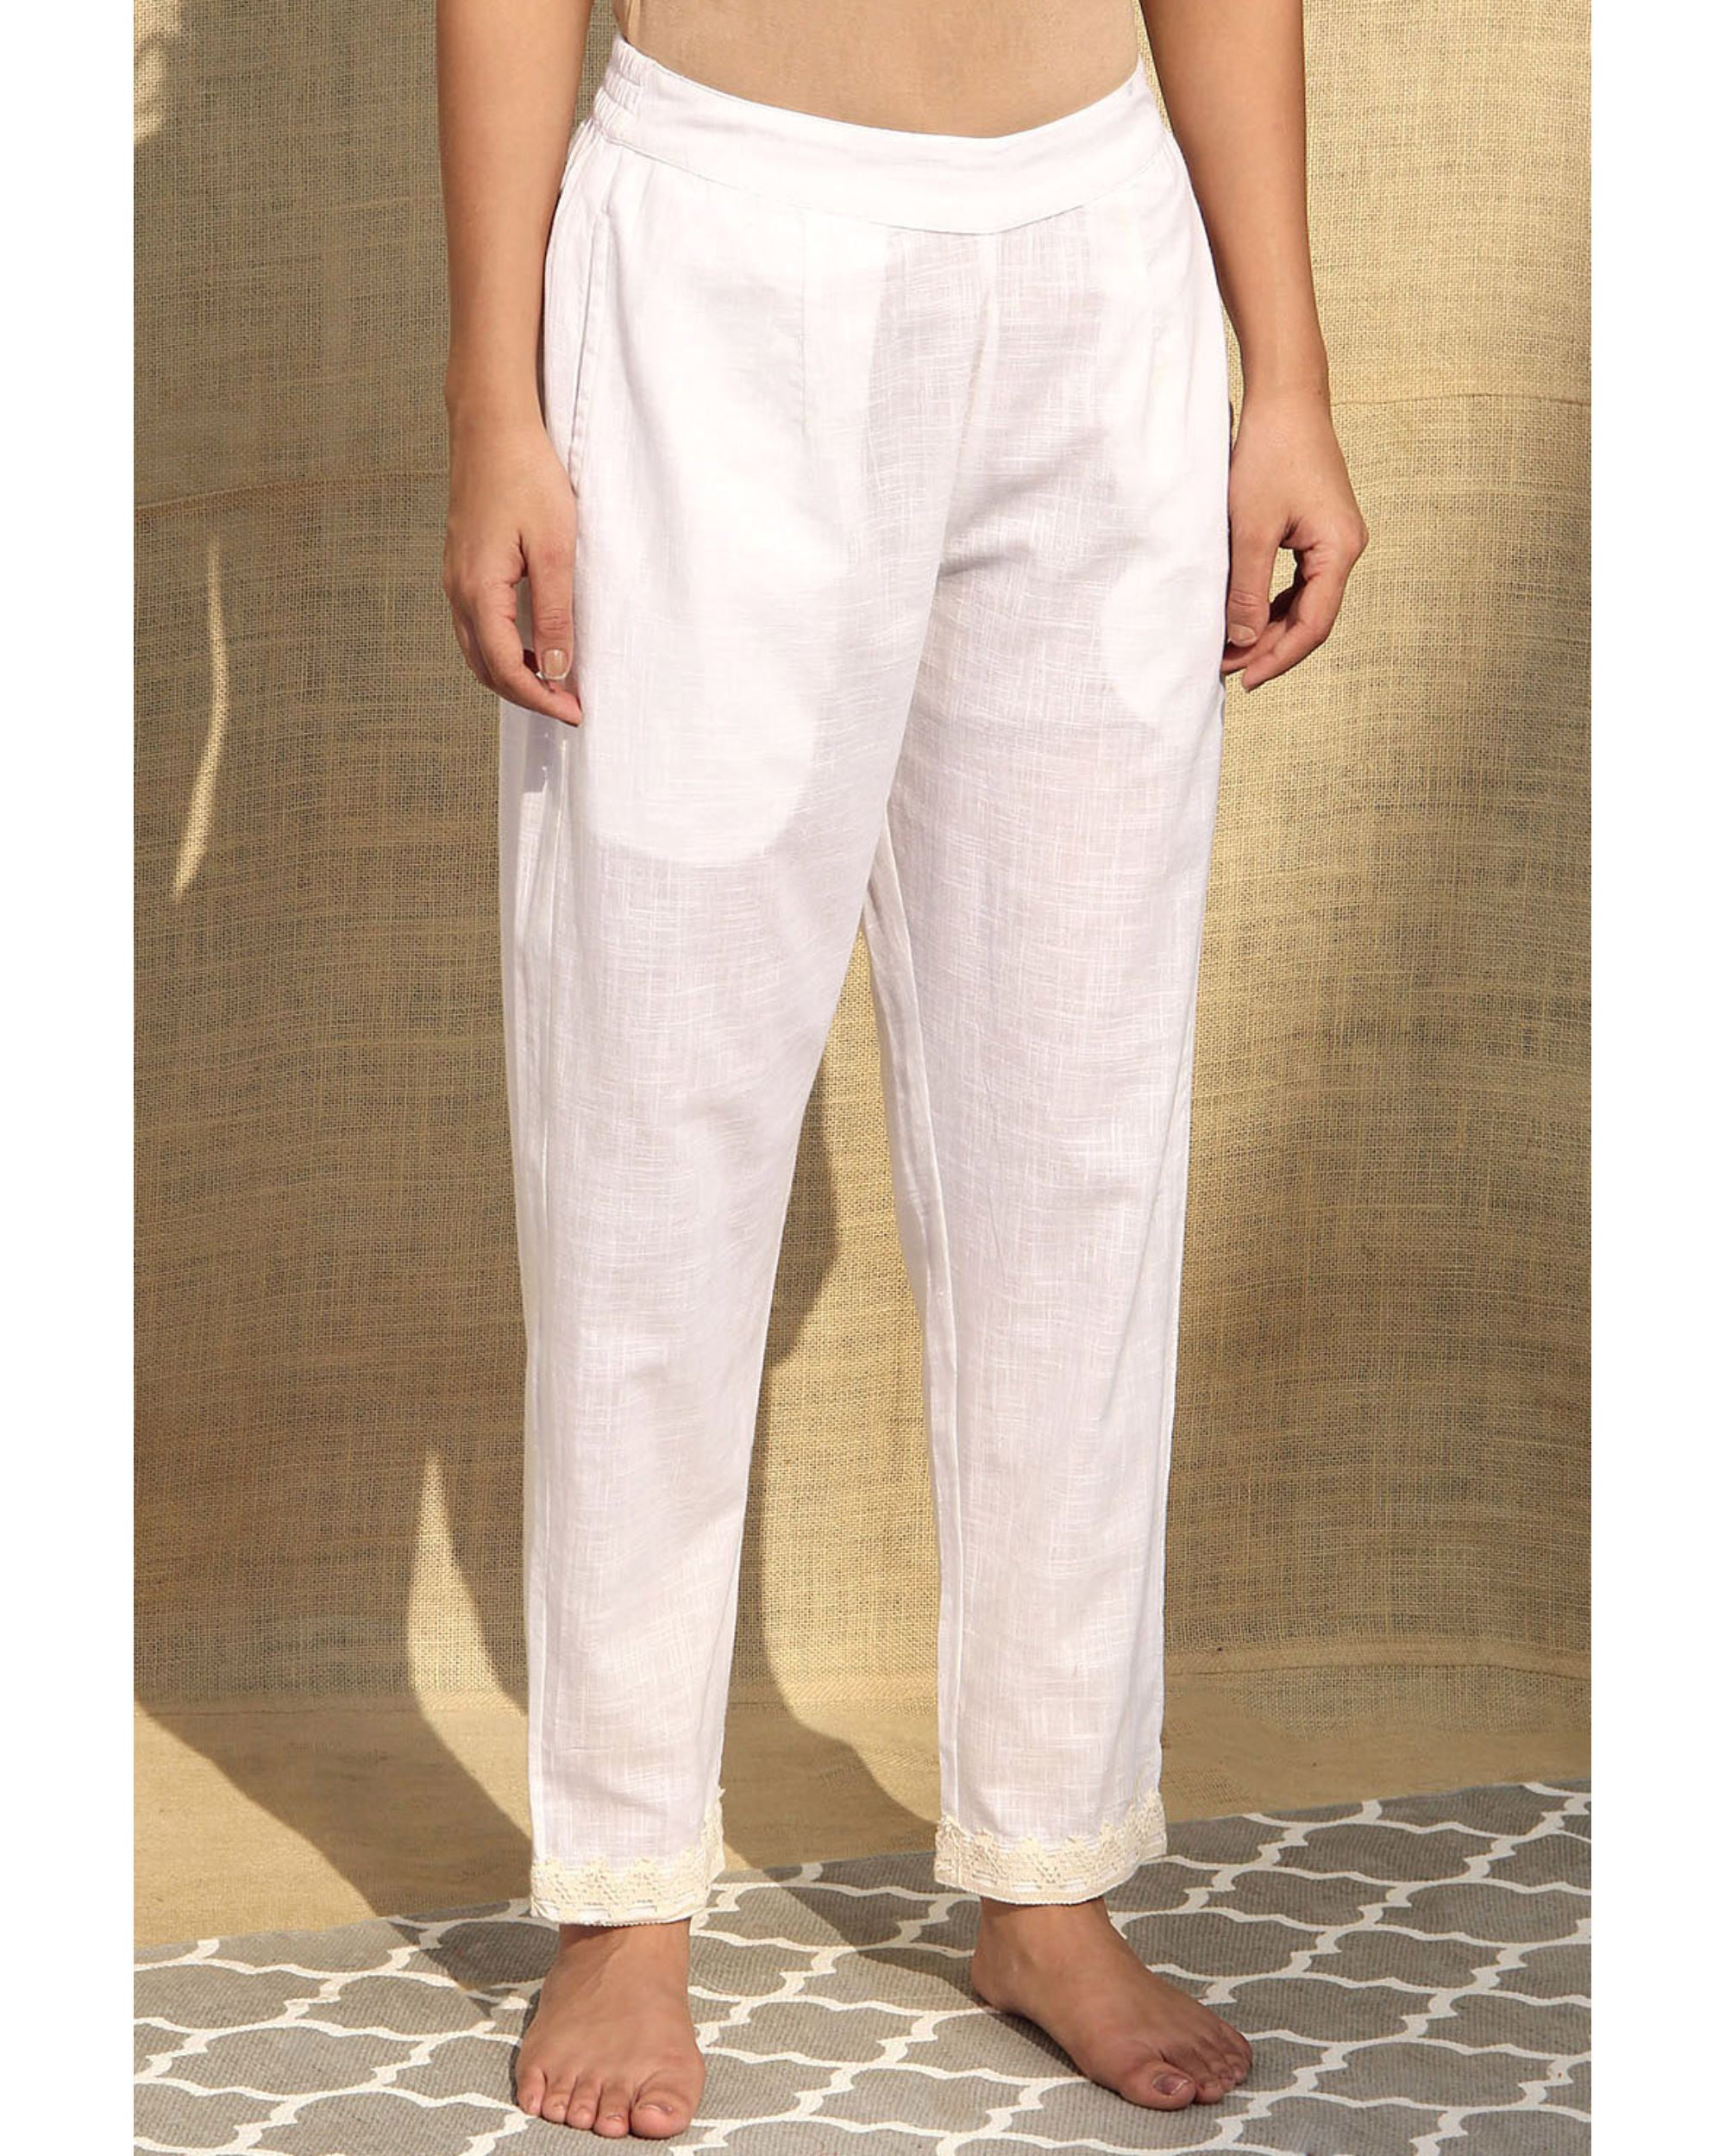 White Cotton Tissue Pants for Women-DP001W –